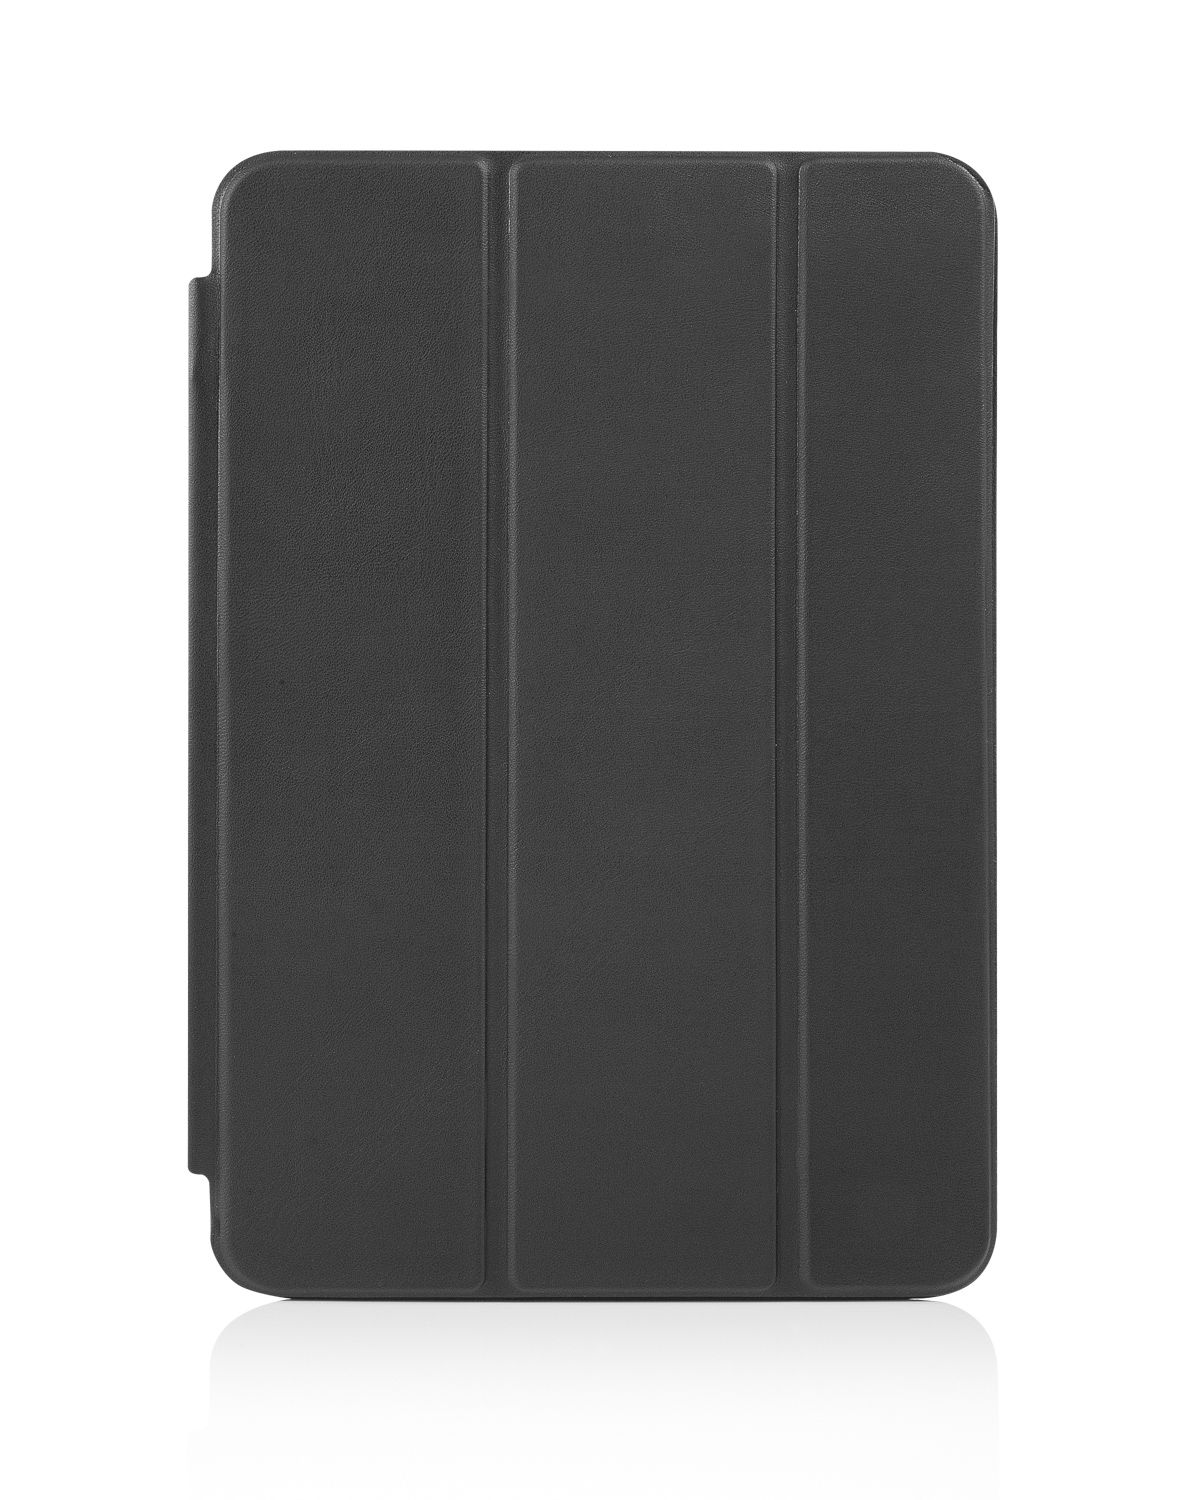 Smart case черный. IPAD Pro 12.9 Smart Case. Smart Case IPAD Mini 3 черный. Smart Case IPAD Mini 2 черный. Smart Case IPAD Mini 4 черный.